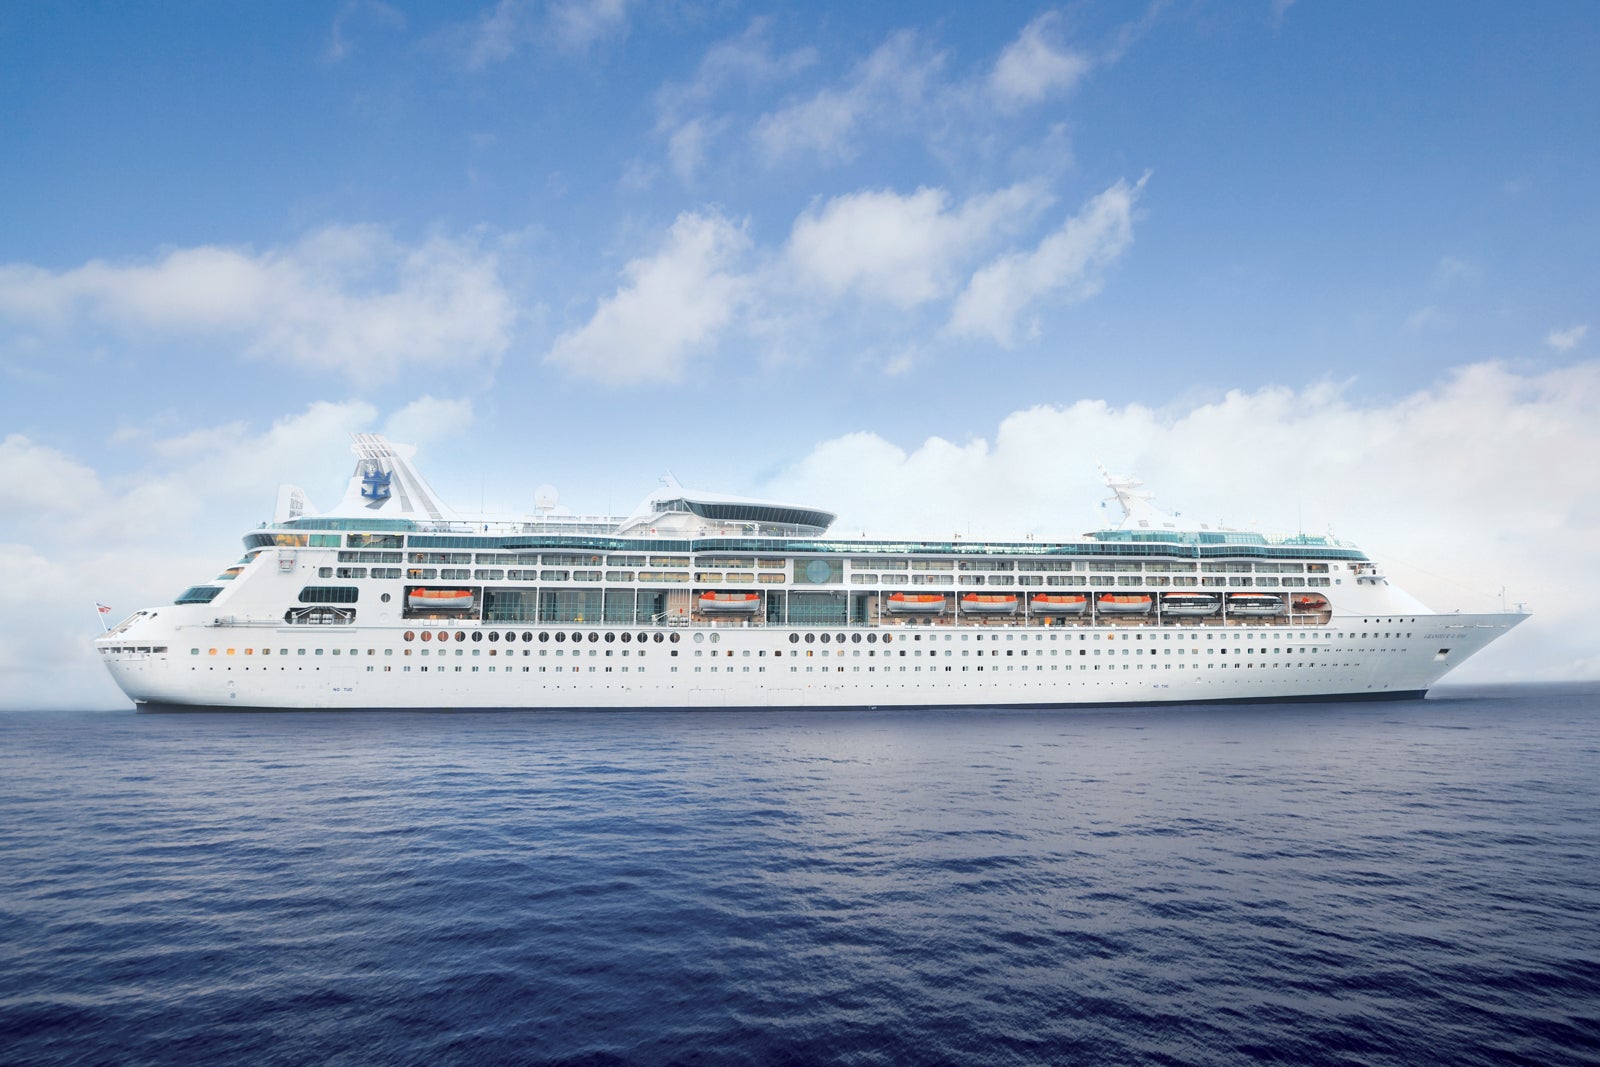 royal caribbean cruise line website